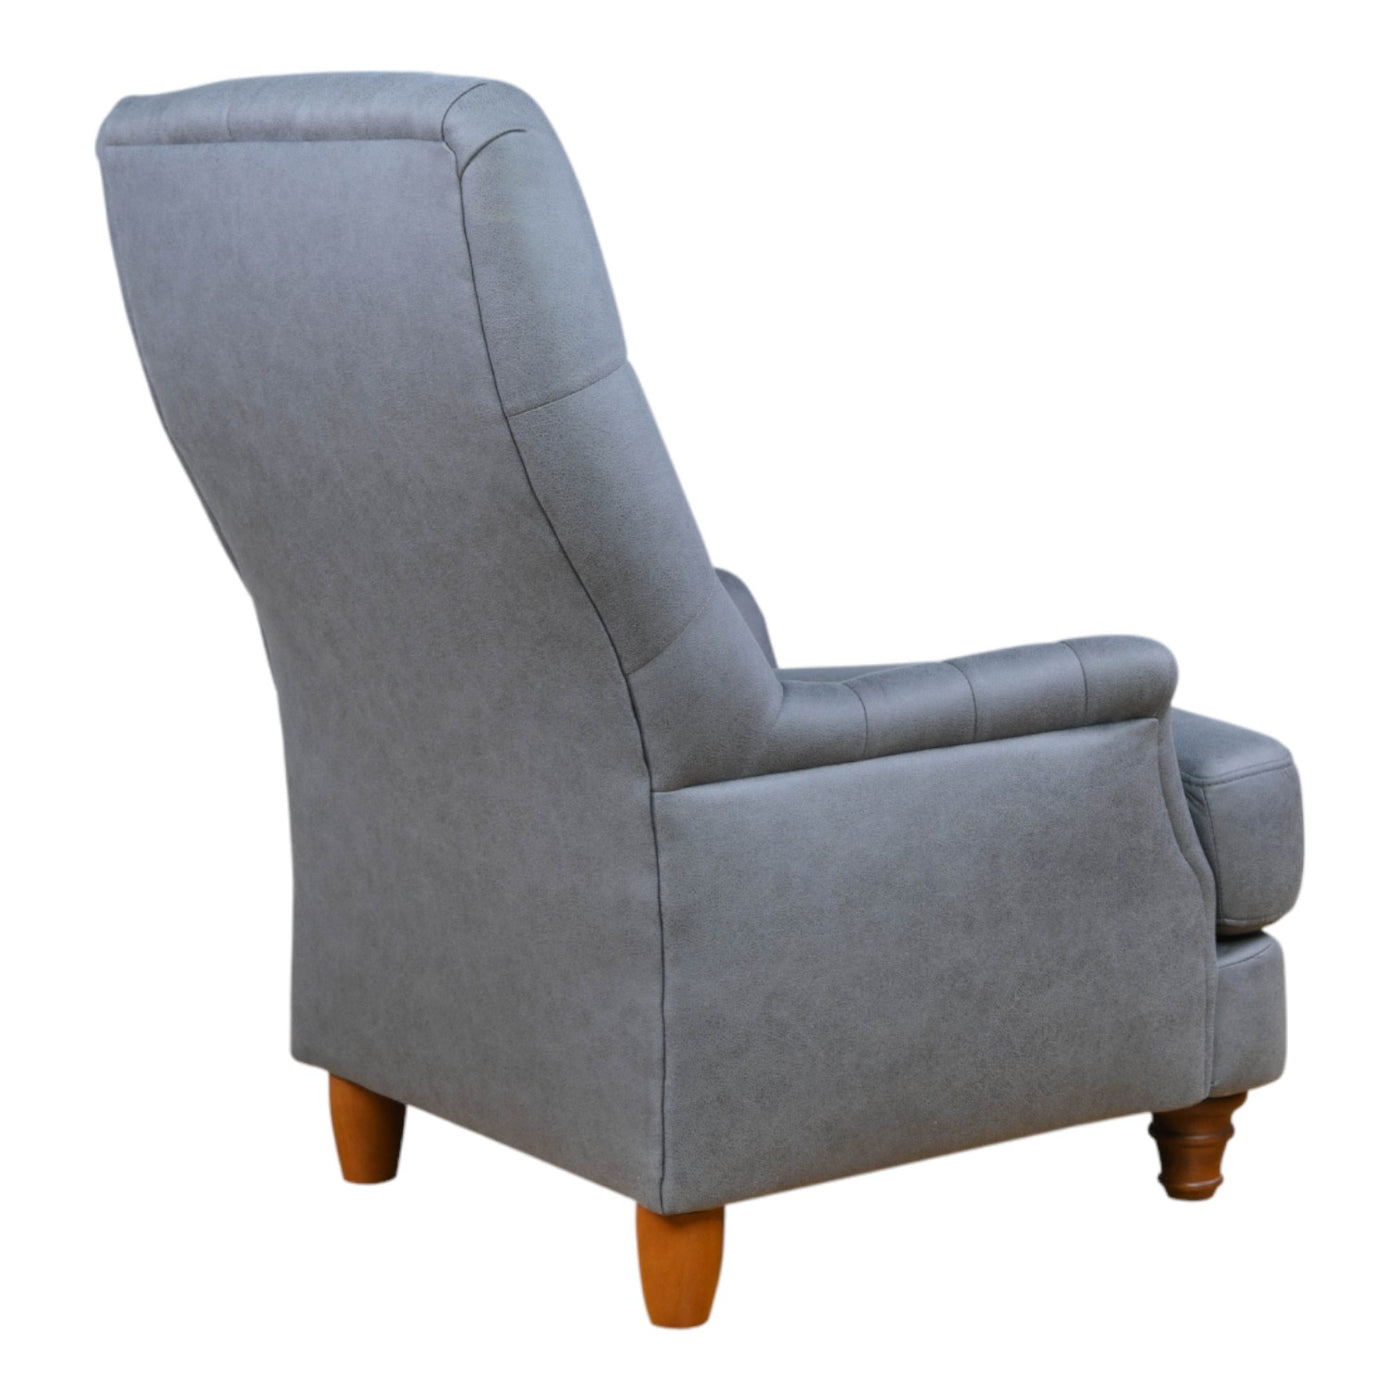 Buckingham Chair Steel Grey Leather Look - Future Classics Furniture